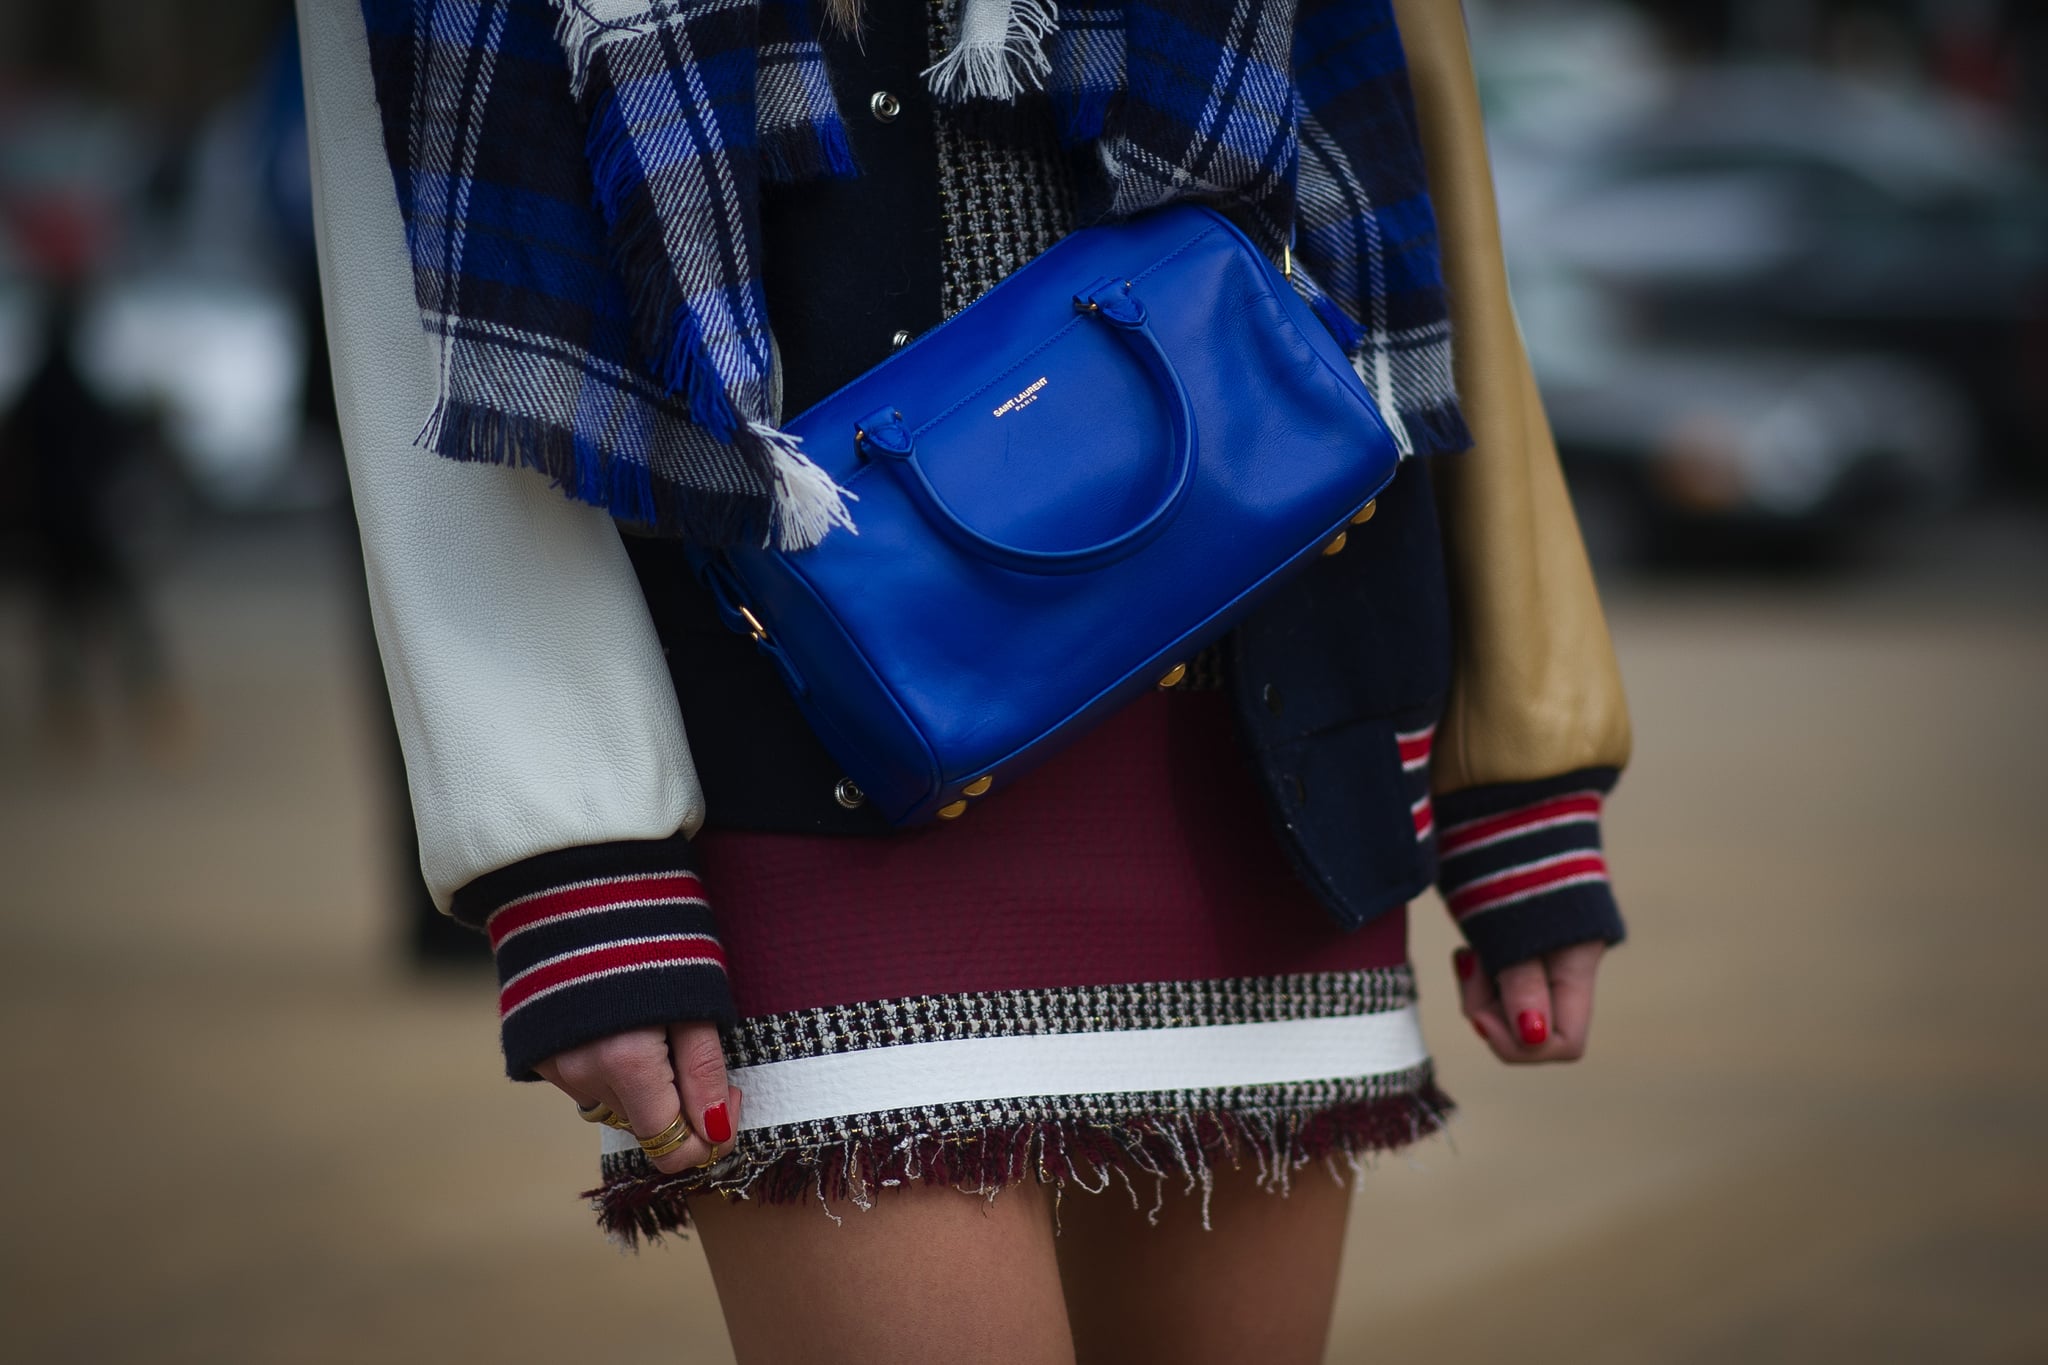 Chiara Ferragni cuts a stylish figure in a blue Louis Vuitton co